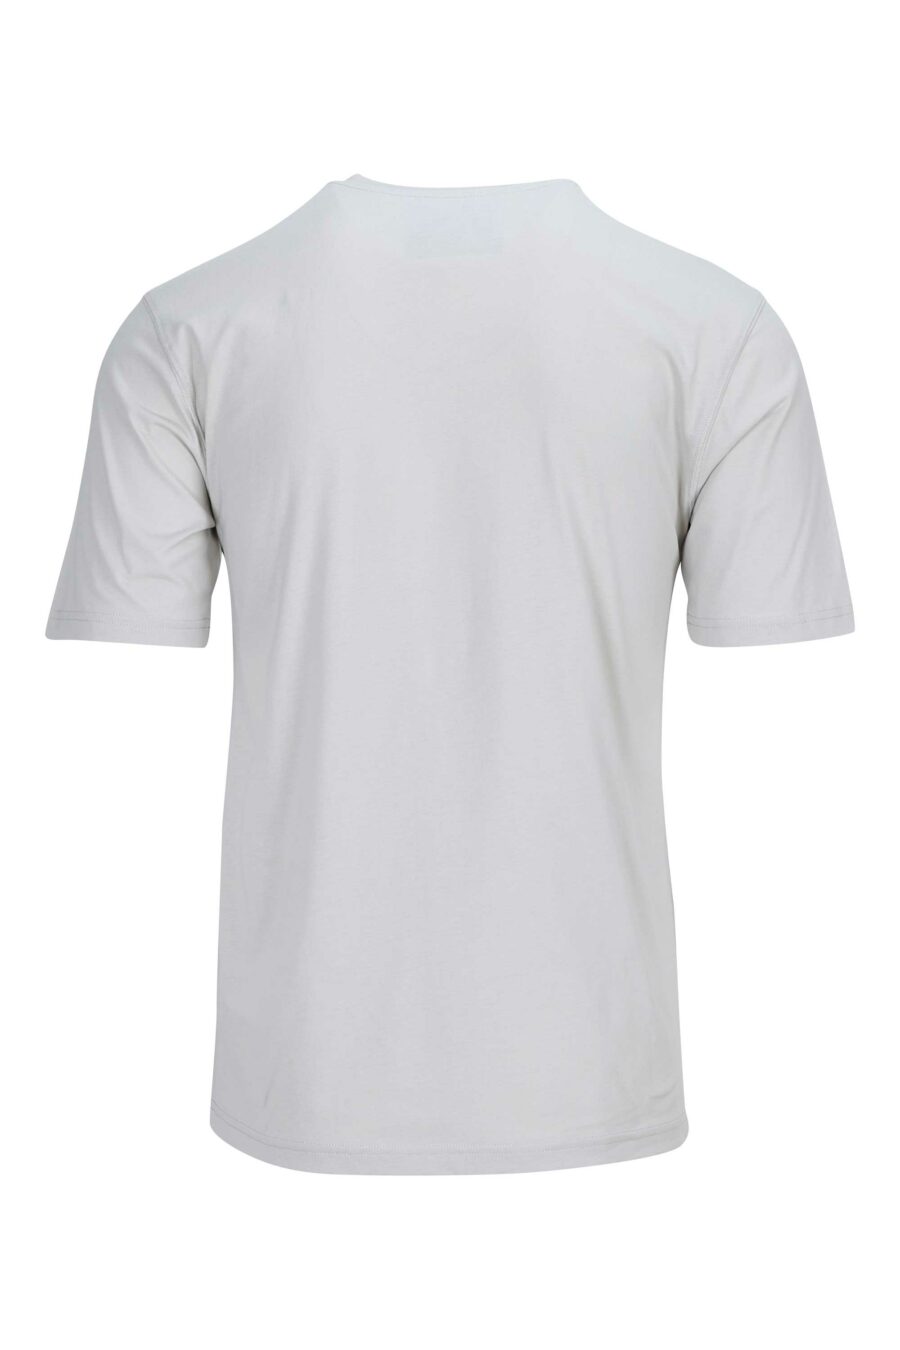 T-shirt grey with maxilogo "Moschino" ticket - 889316954807 1